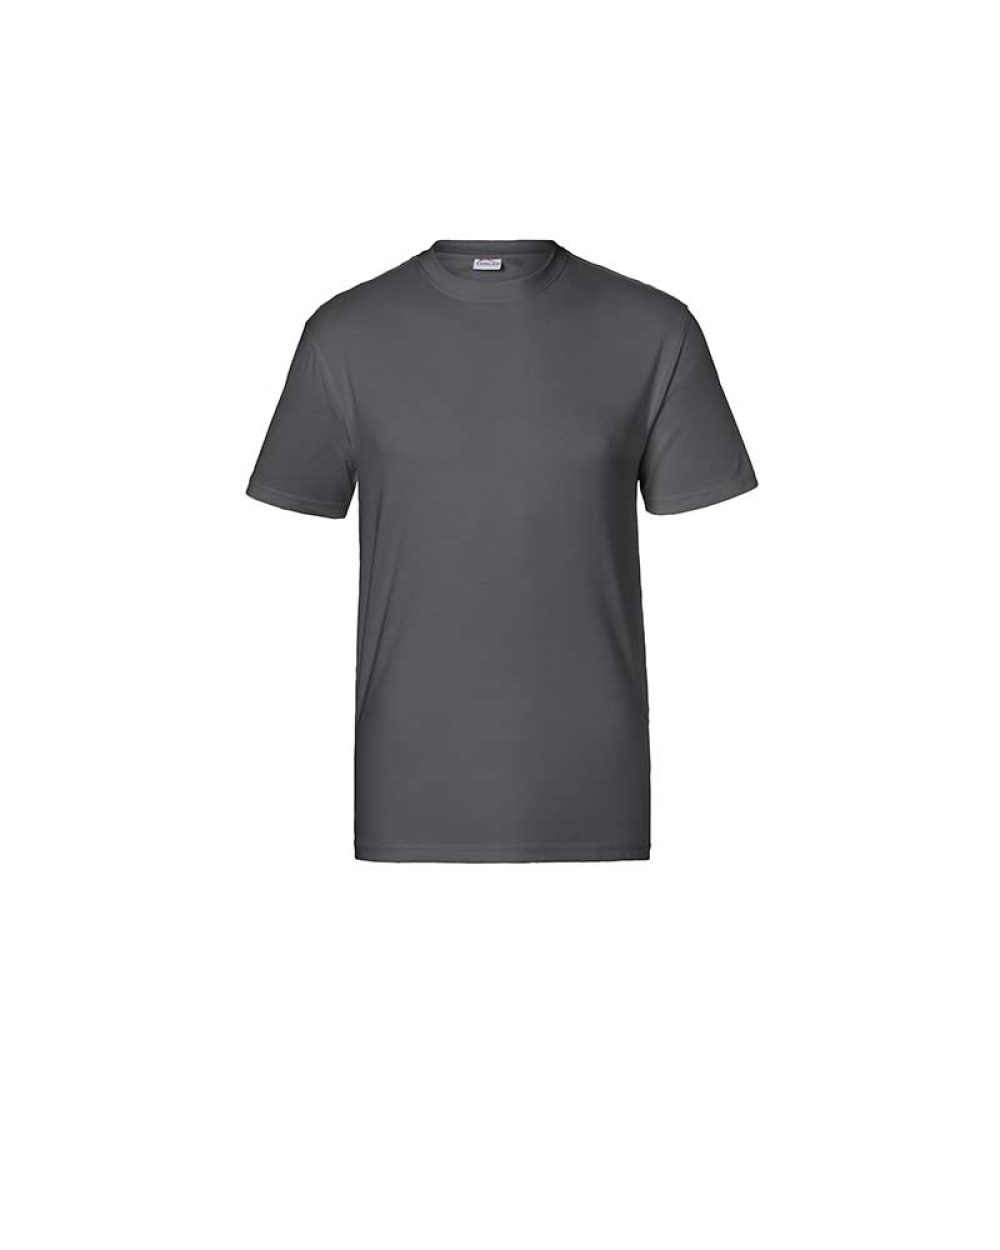 kuebler-t-shirt-shirts-5124-6538-97